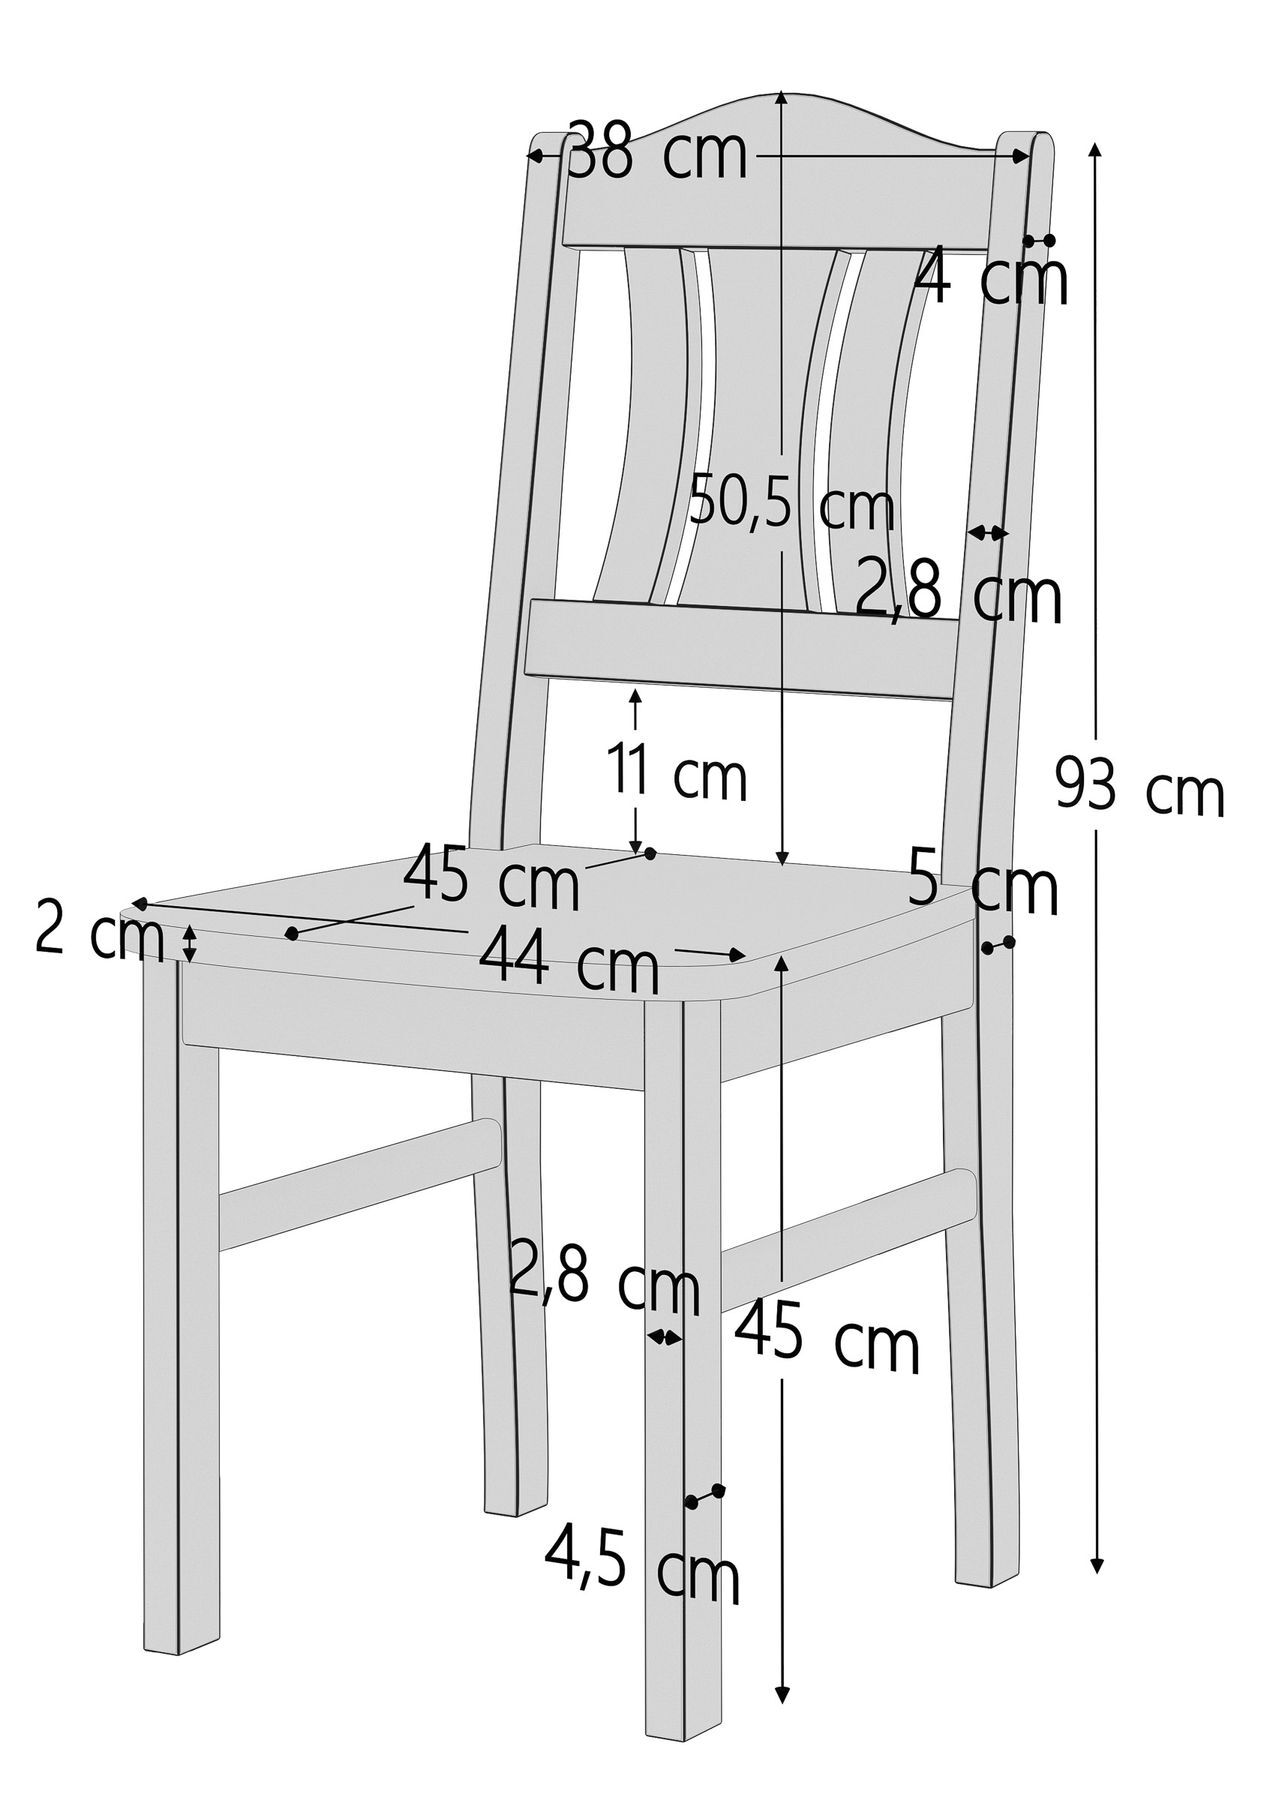 B-WARE Küchenstuhl robust Massivholzstuhl Kiefer Esszimmerstuhl Doppelpack oder Einzelstuhl V-90.71-26